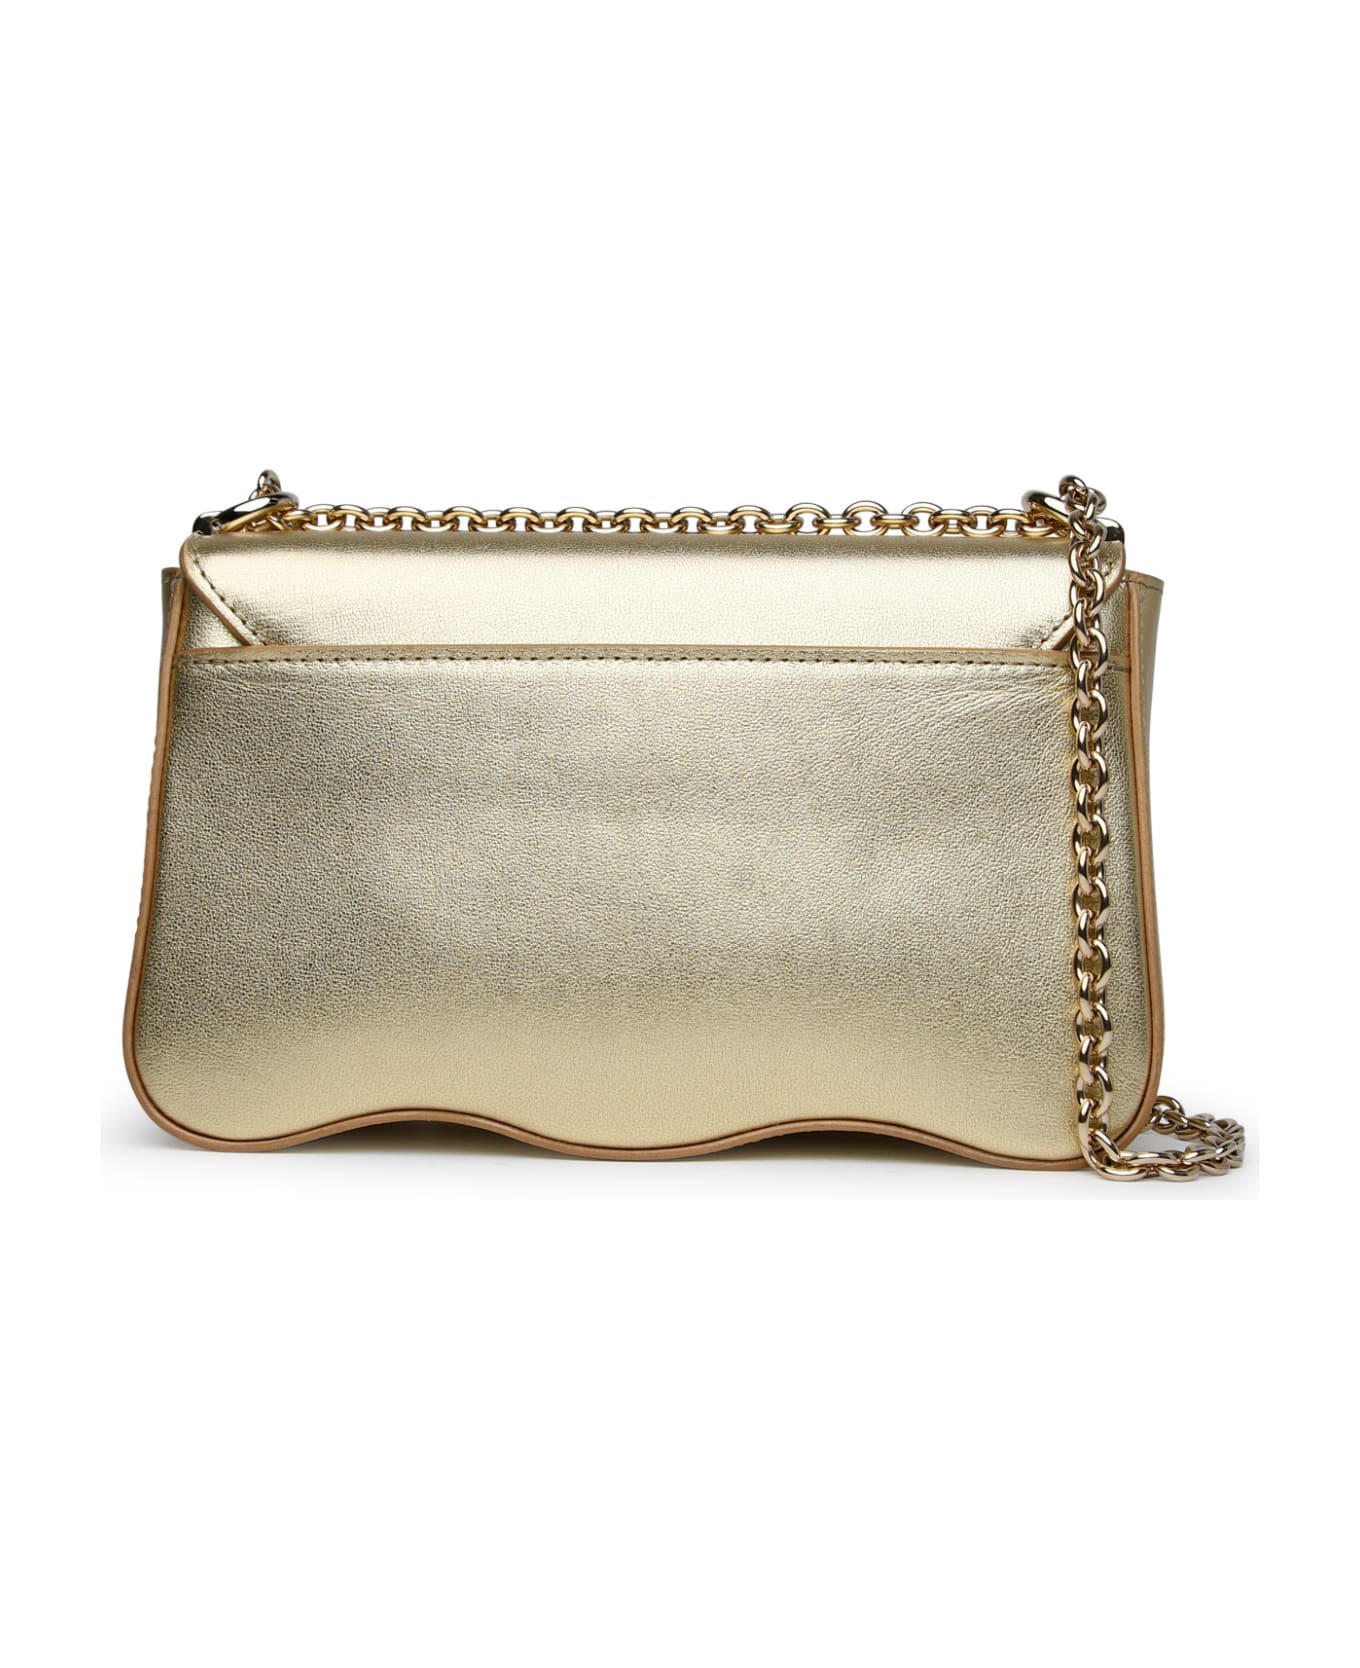 Furla 'furla 1927' Gold Calf Leather Bag - Oro